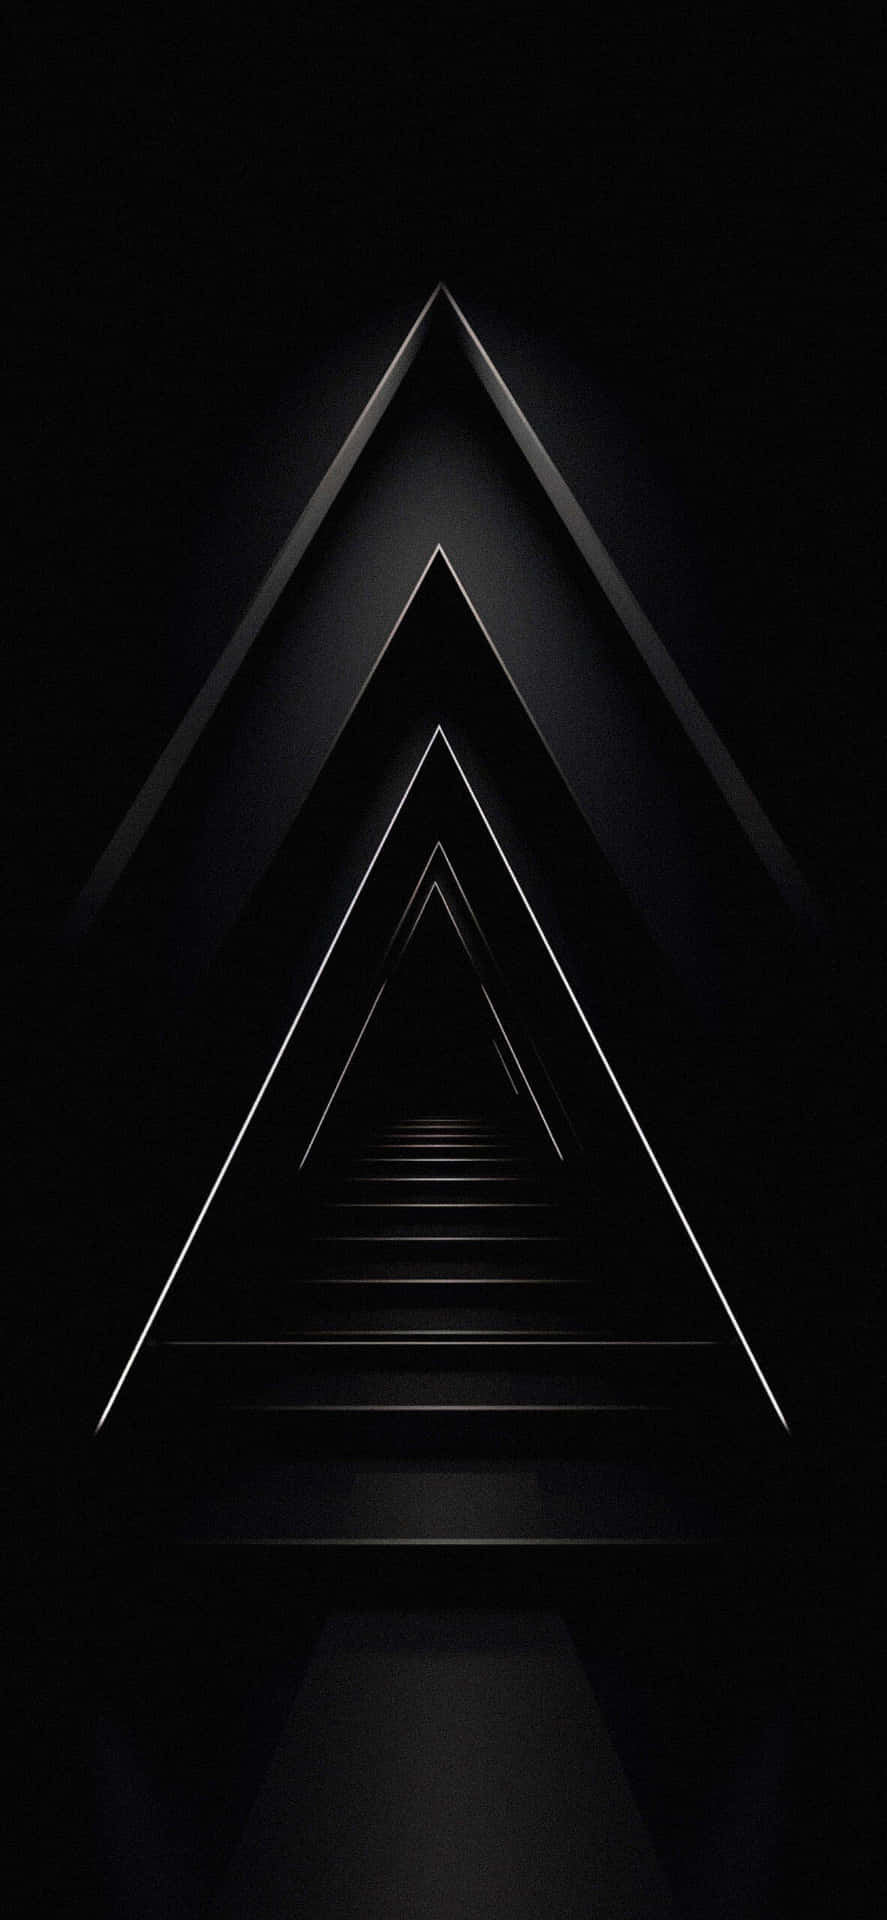 Abstract Triangular Black Grey Gradient Background